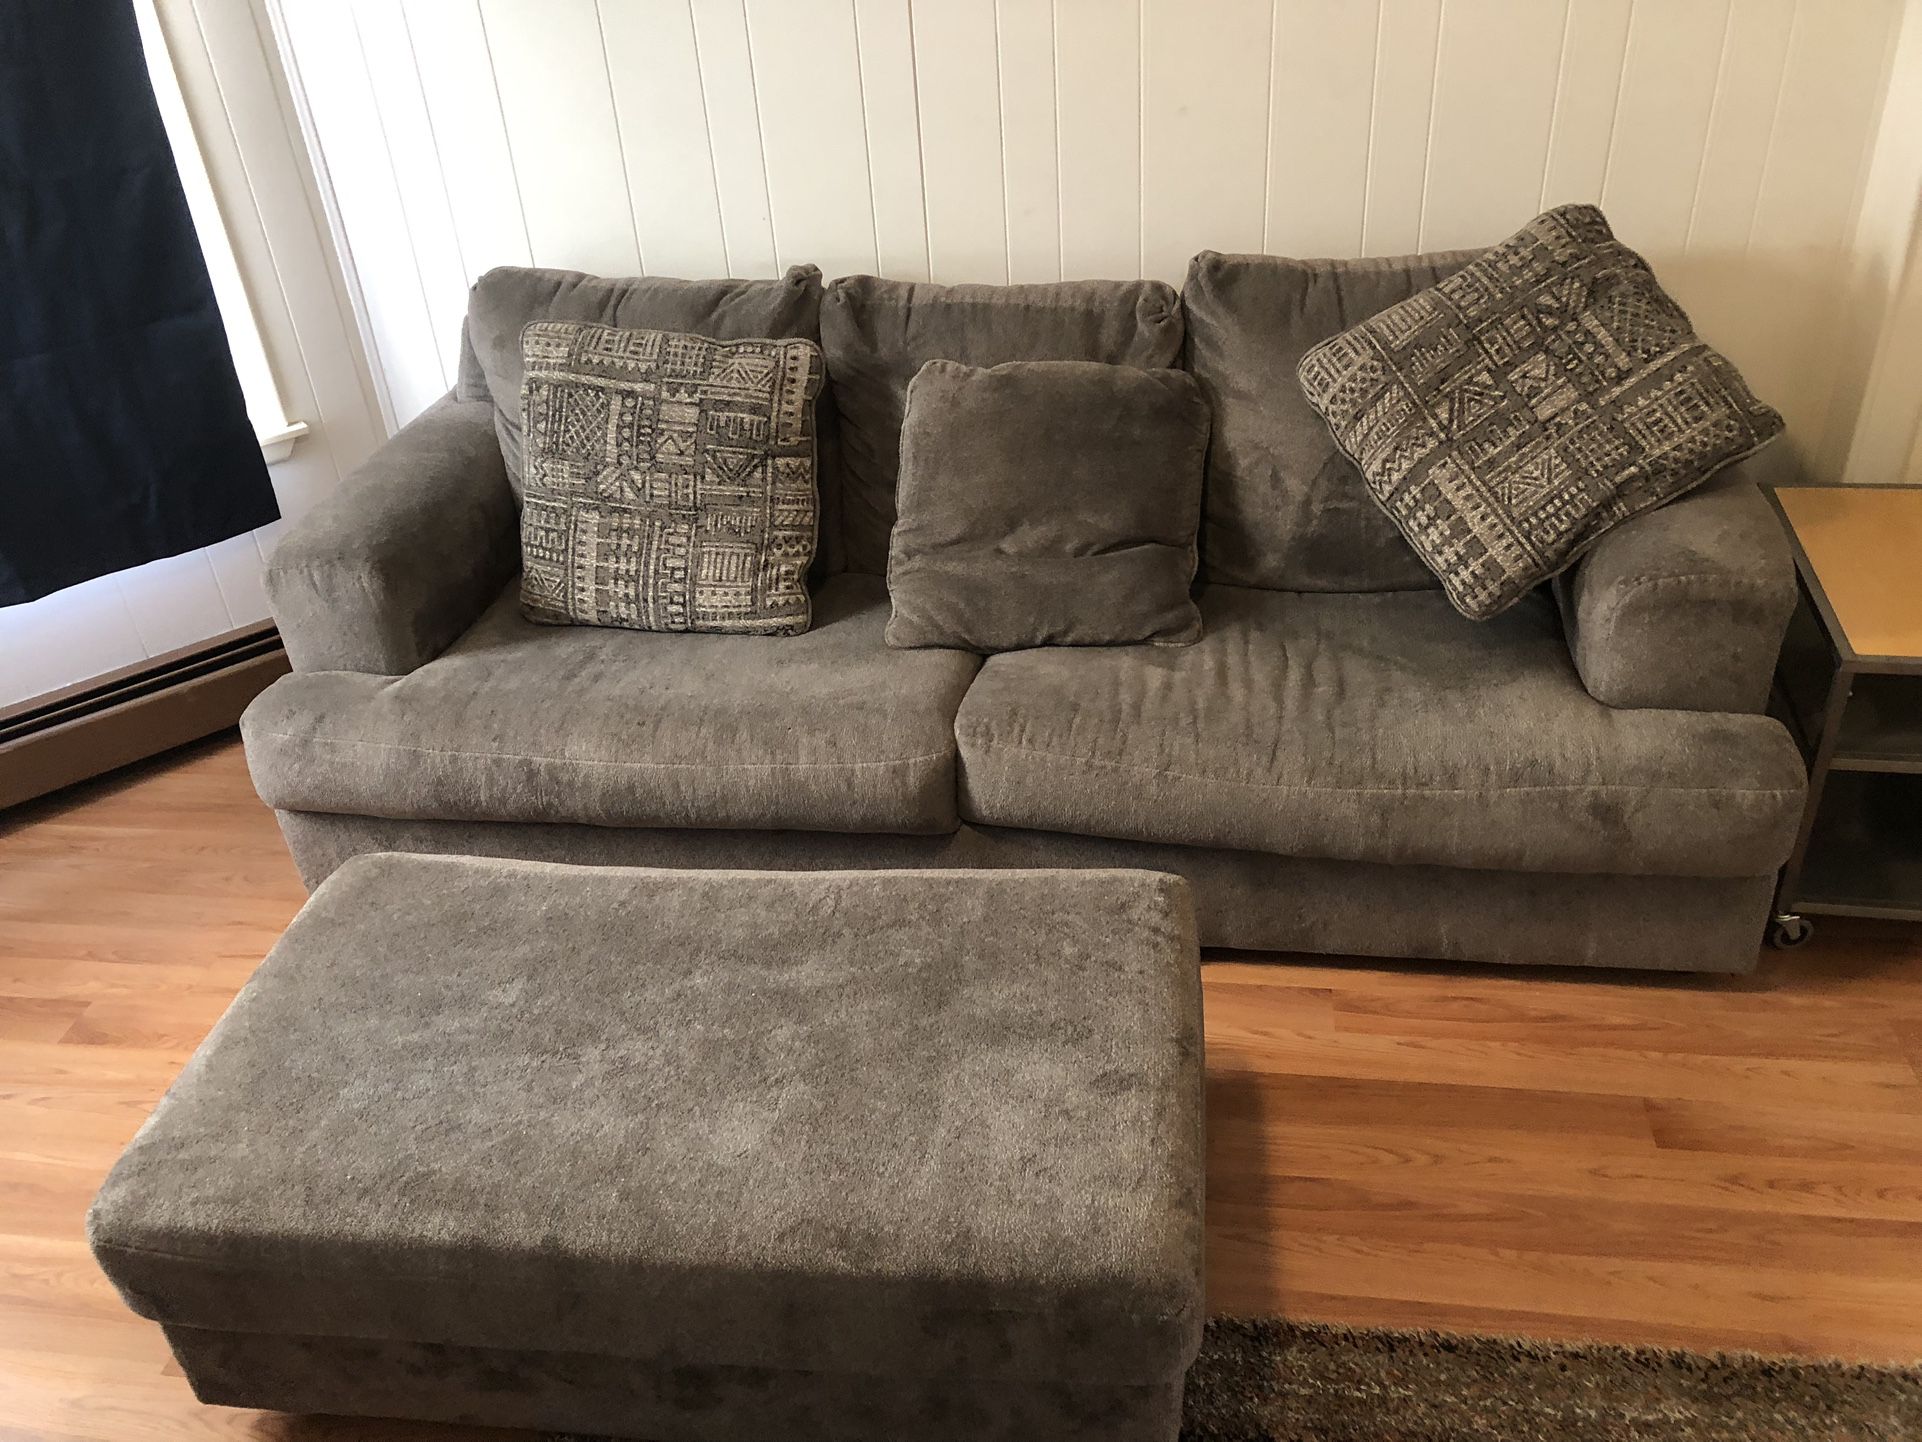 Couch, Ottoman, Pillows